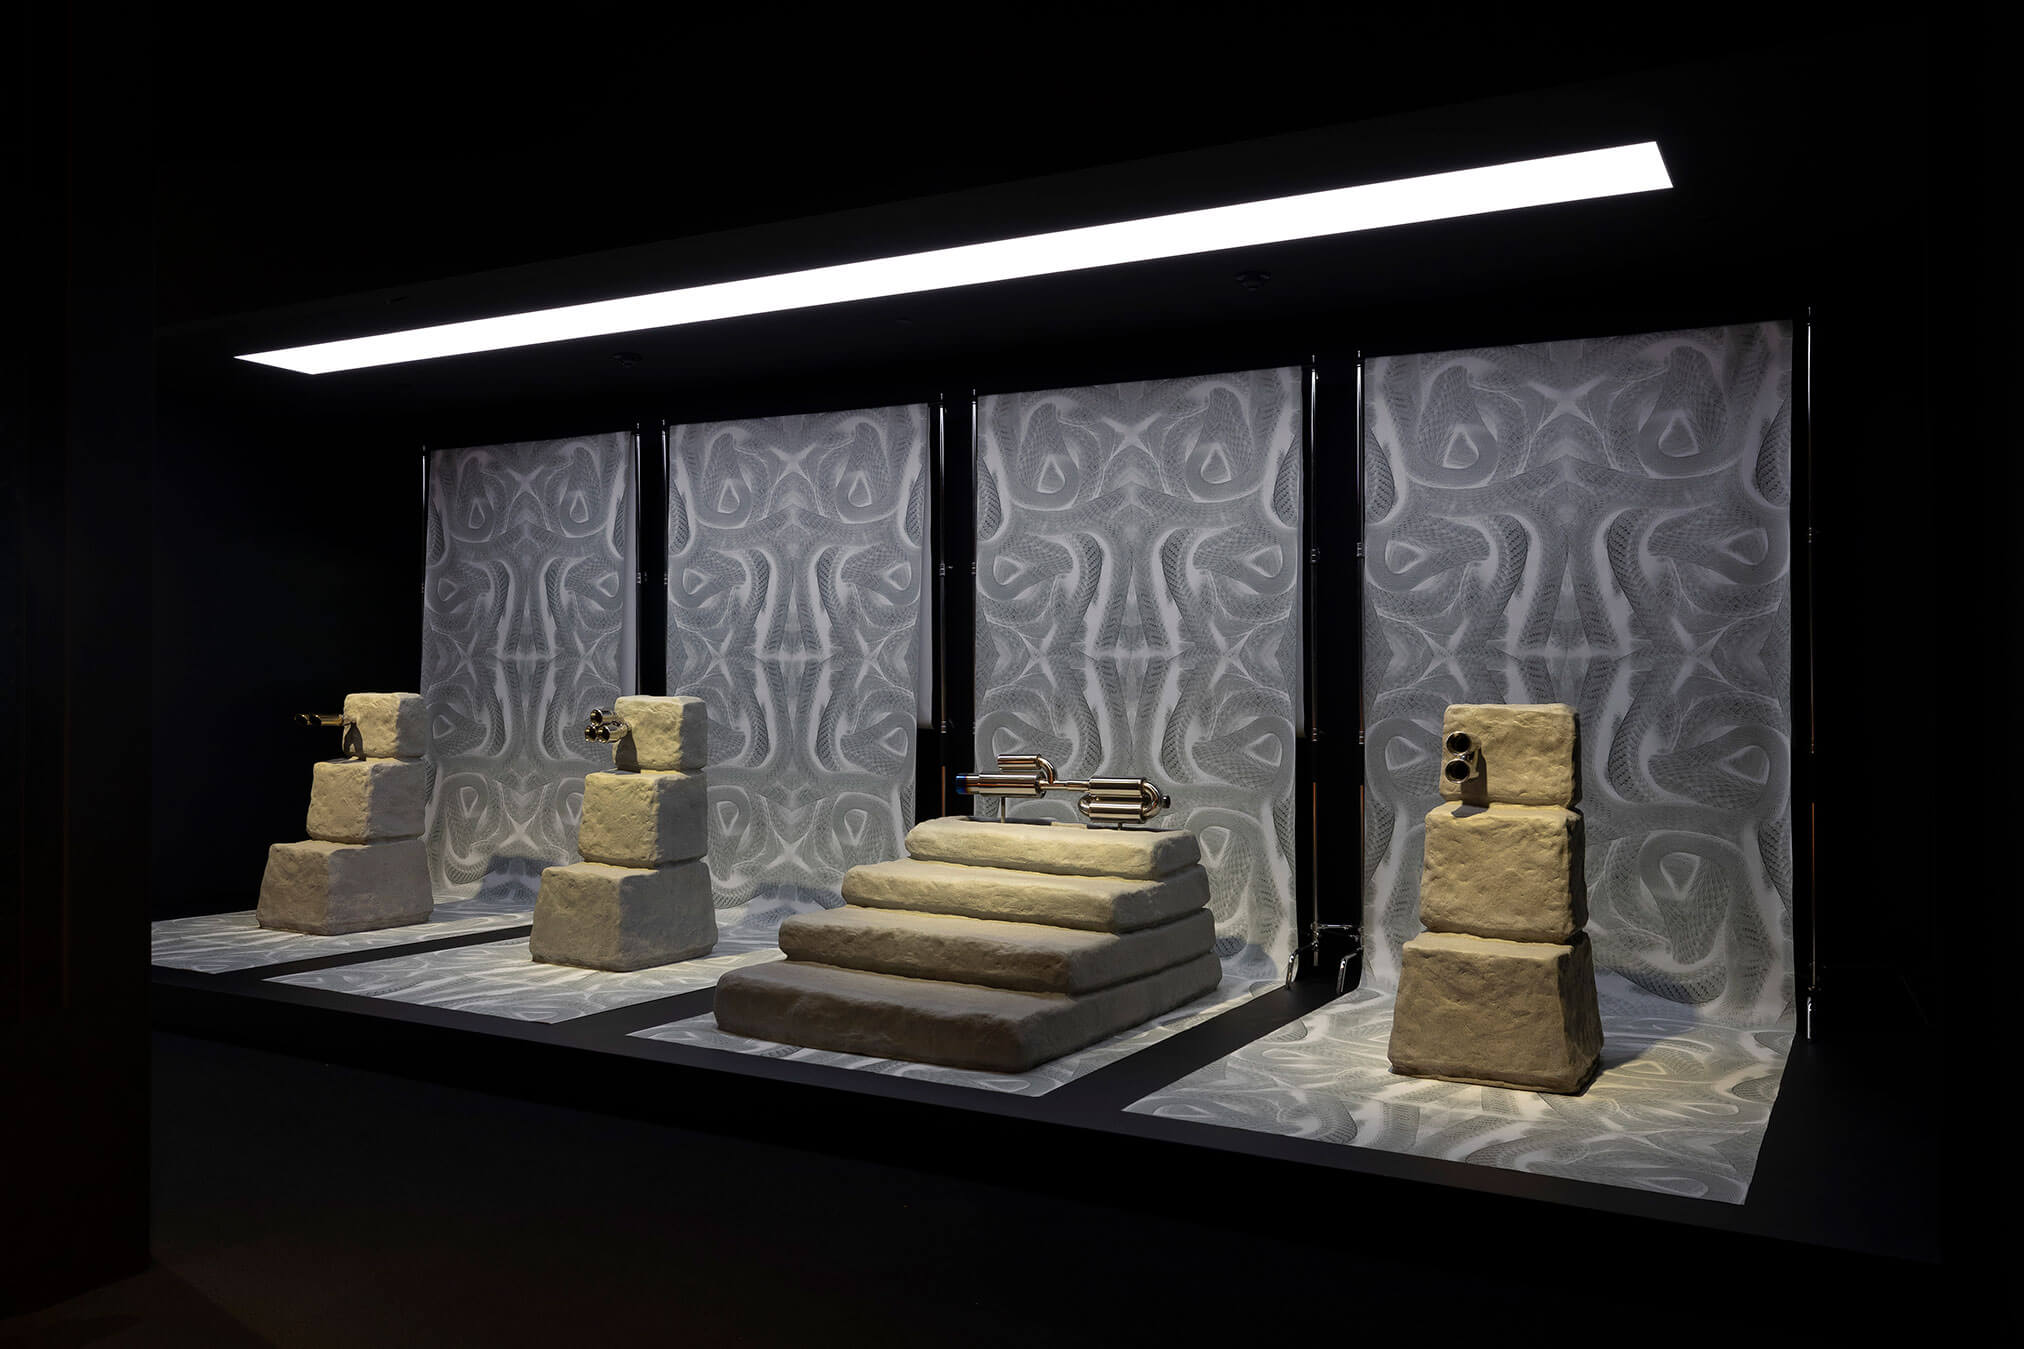 White rabbit gallery, Laozi's Furnace exhibition. Artwork:GUAN-XIAO_4S-Prequel_2015